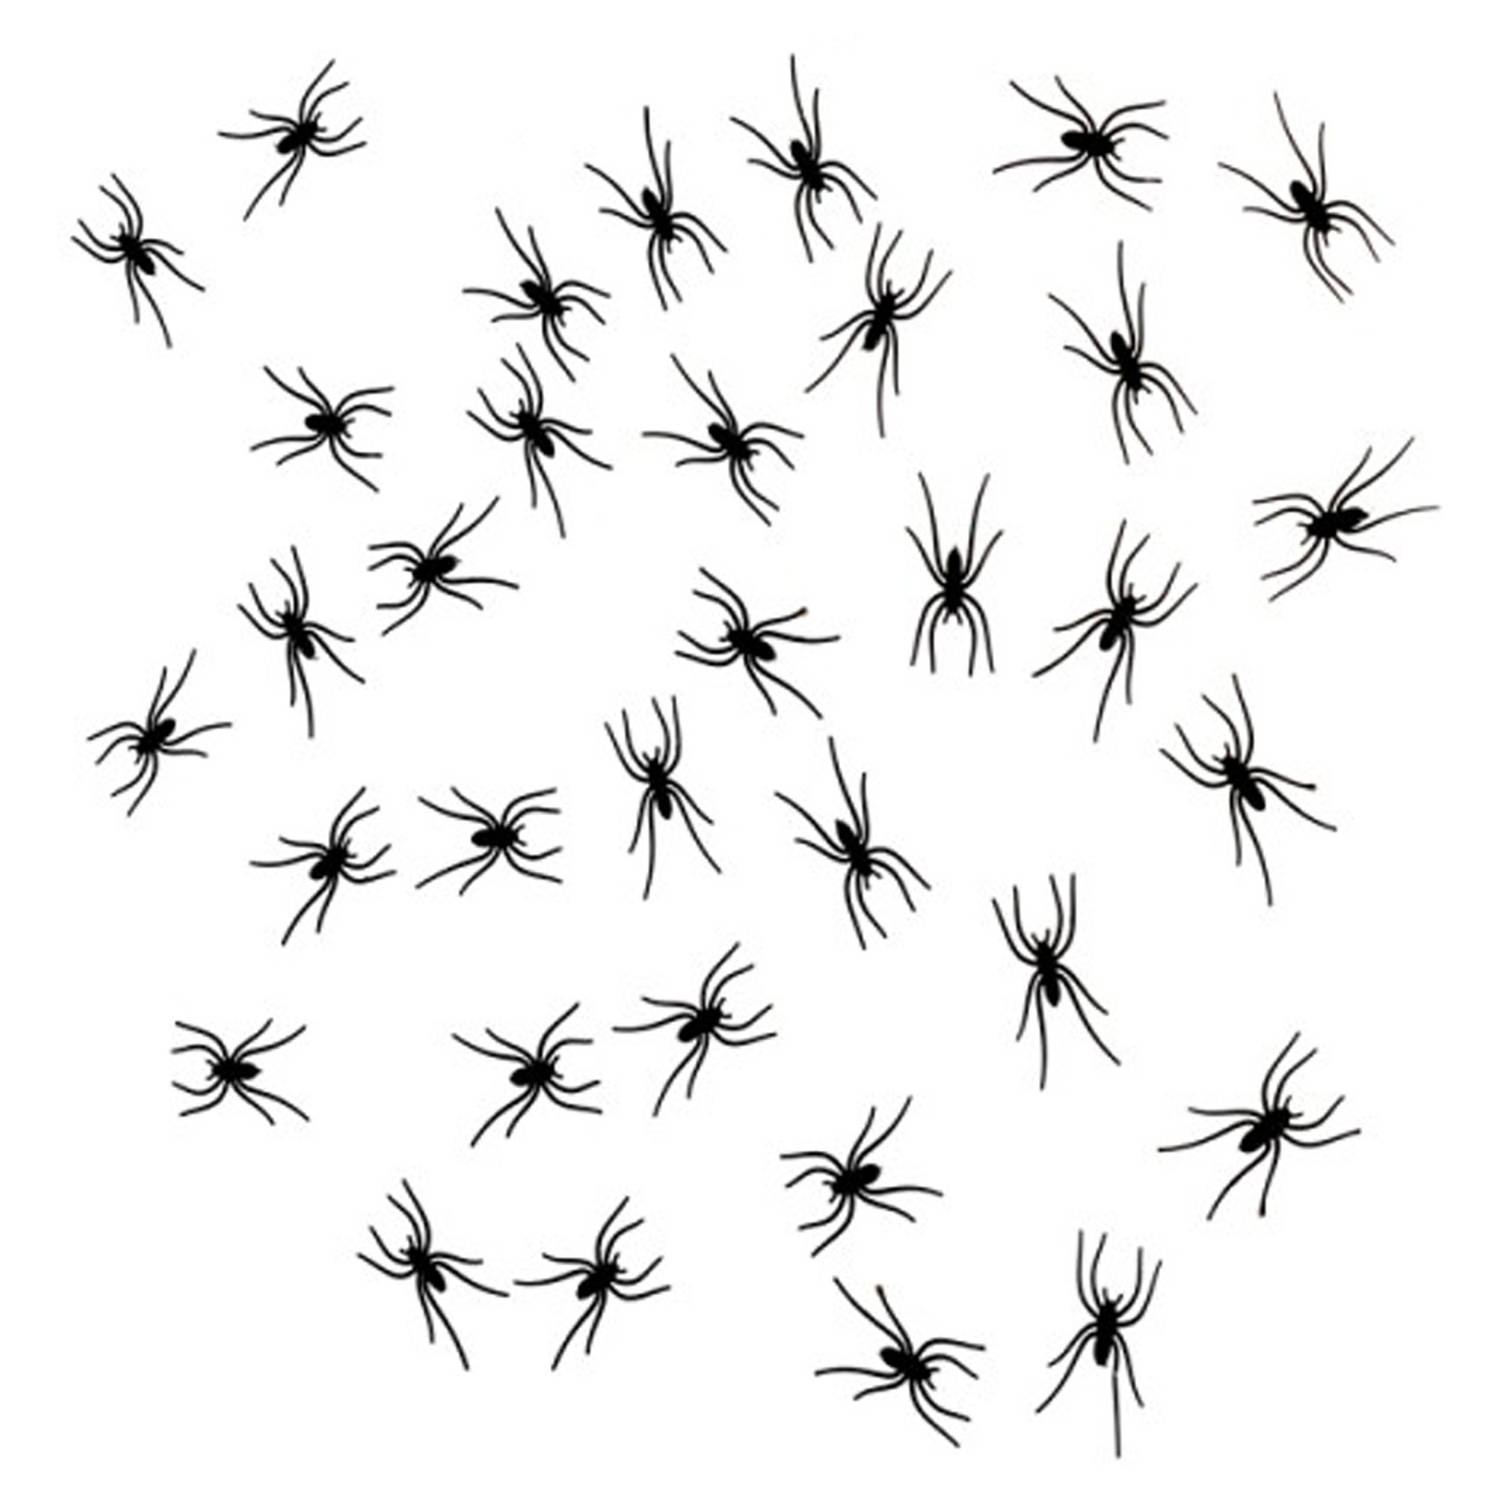 Chaks nep spinnen/spinnetjes 4 x 2 cm - zwart - 50x stuks - Horror/griezel thema decoratie beestjes